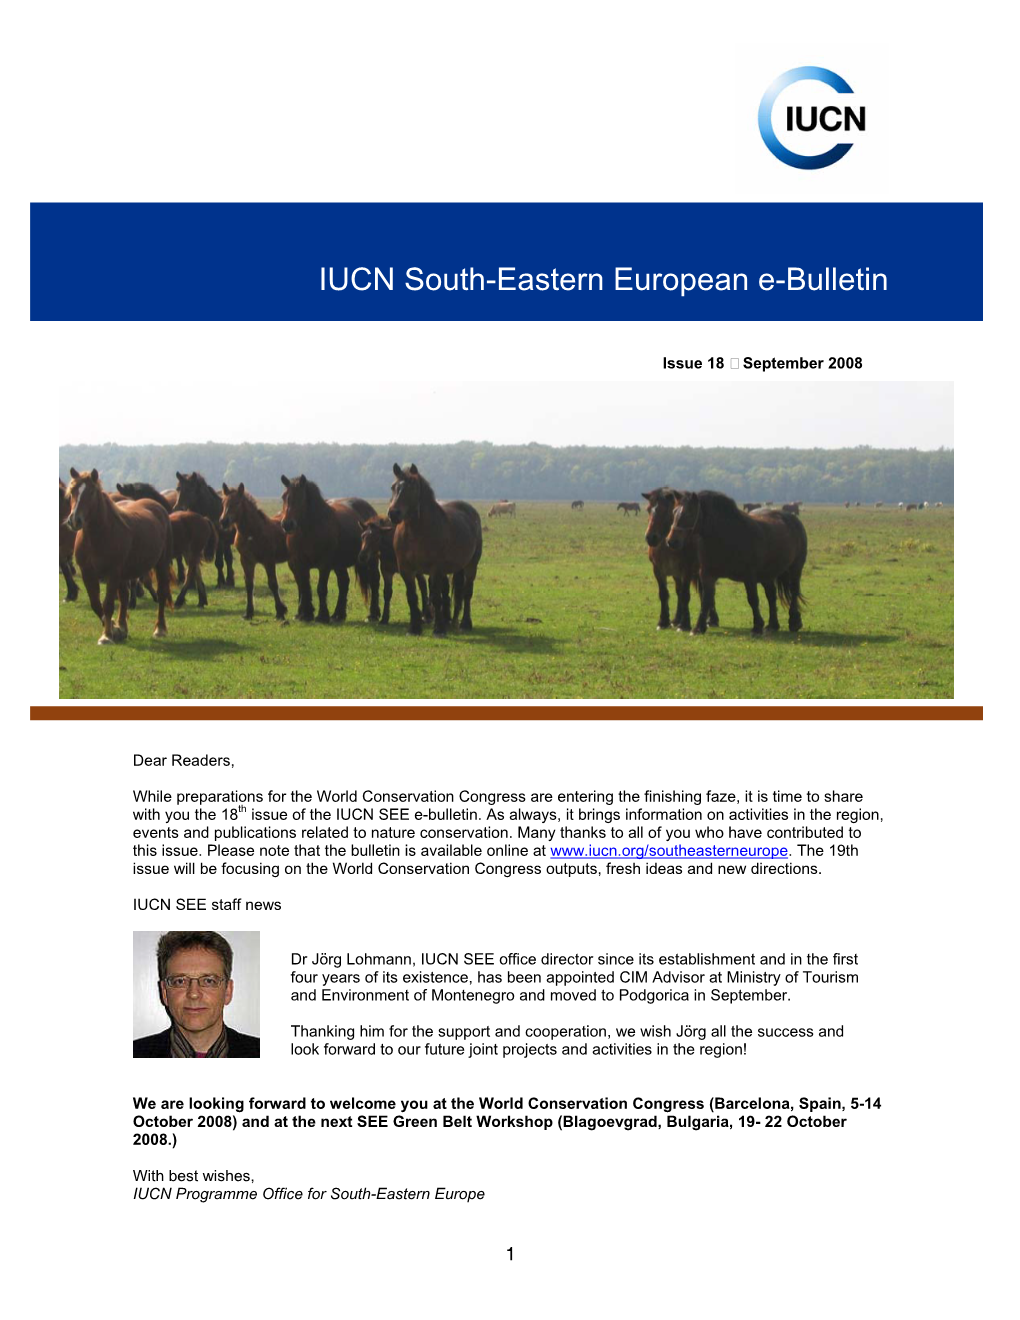 IUCN South-Eastern European E-Bulletin 18